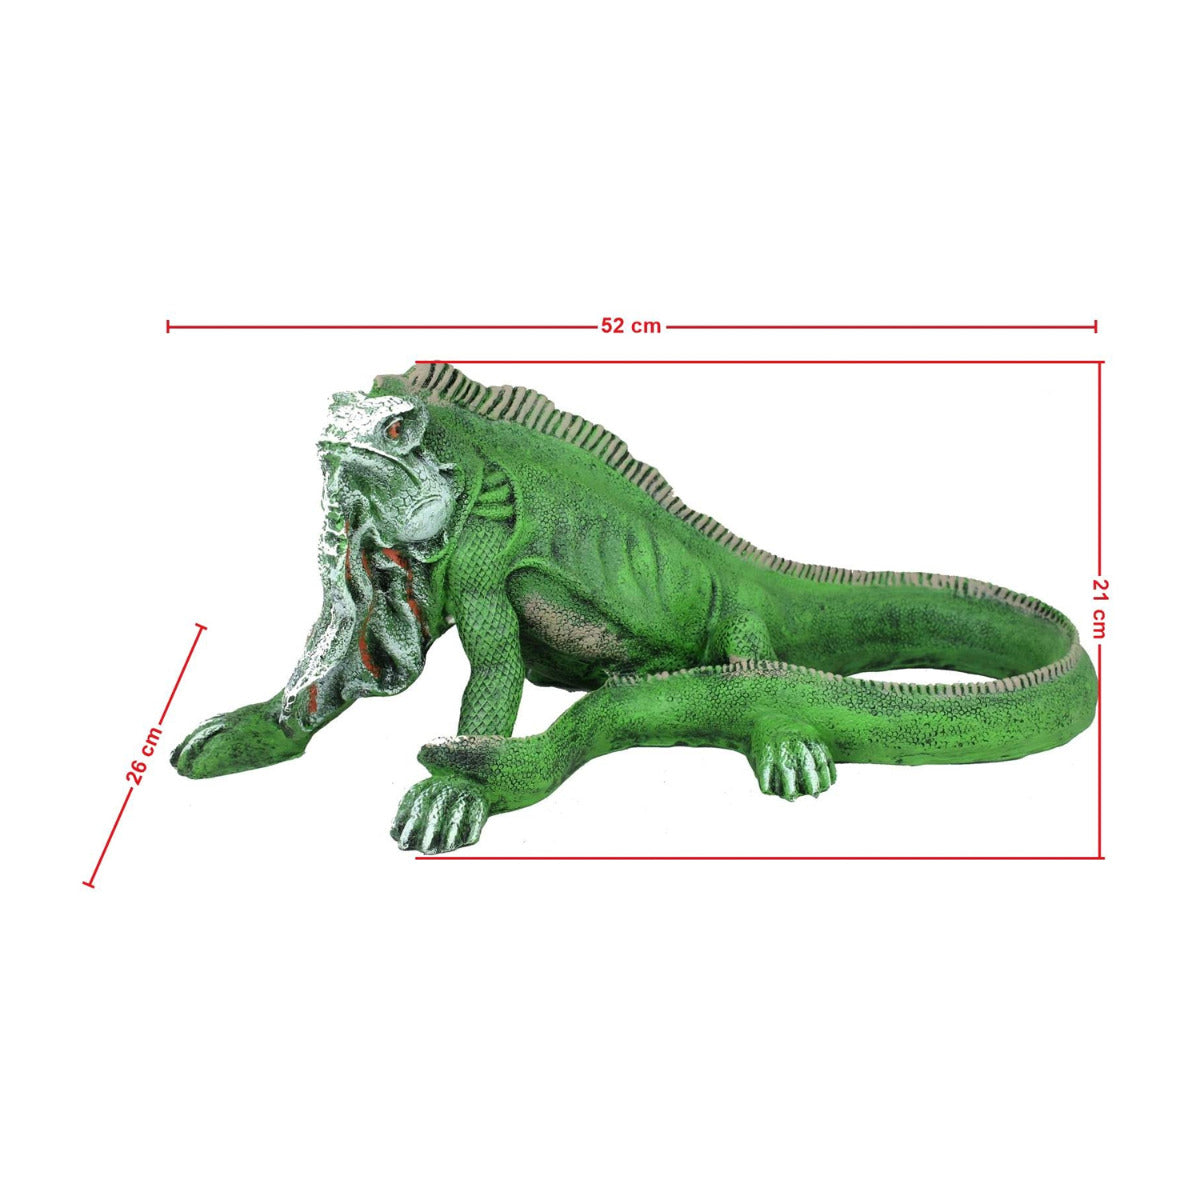 Dekofigur Tierfigur Leguan 52 cm grün Echse Reptilien Gartenfigur exotische Dekoration lebensecht